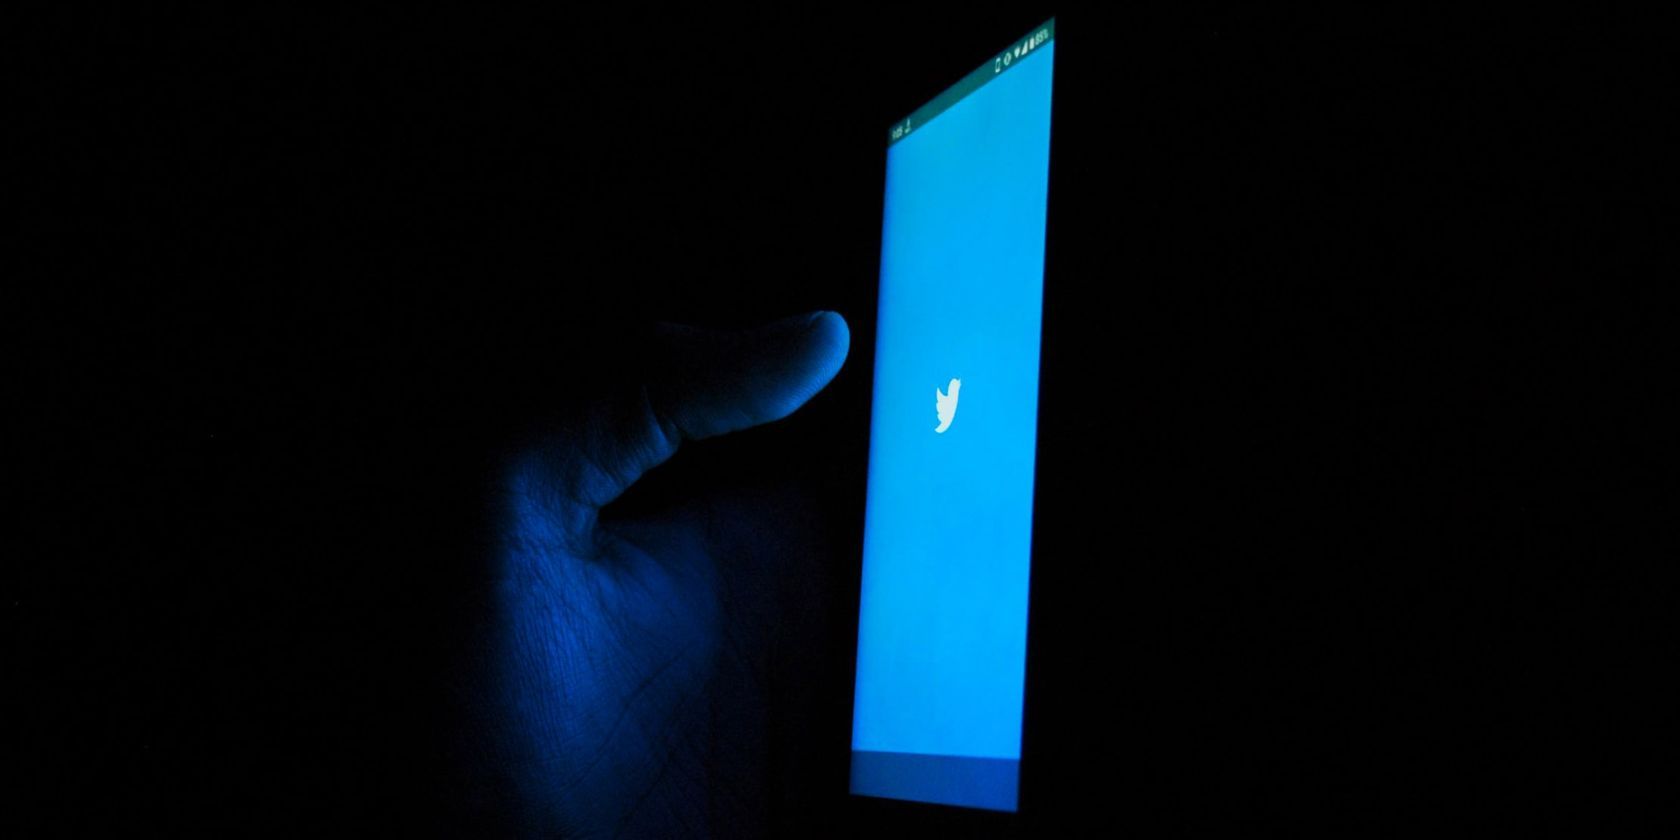 person in dark room using twitter app on smartphone